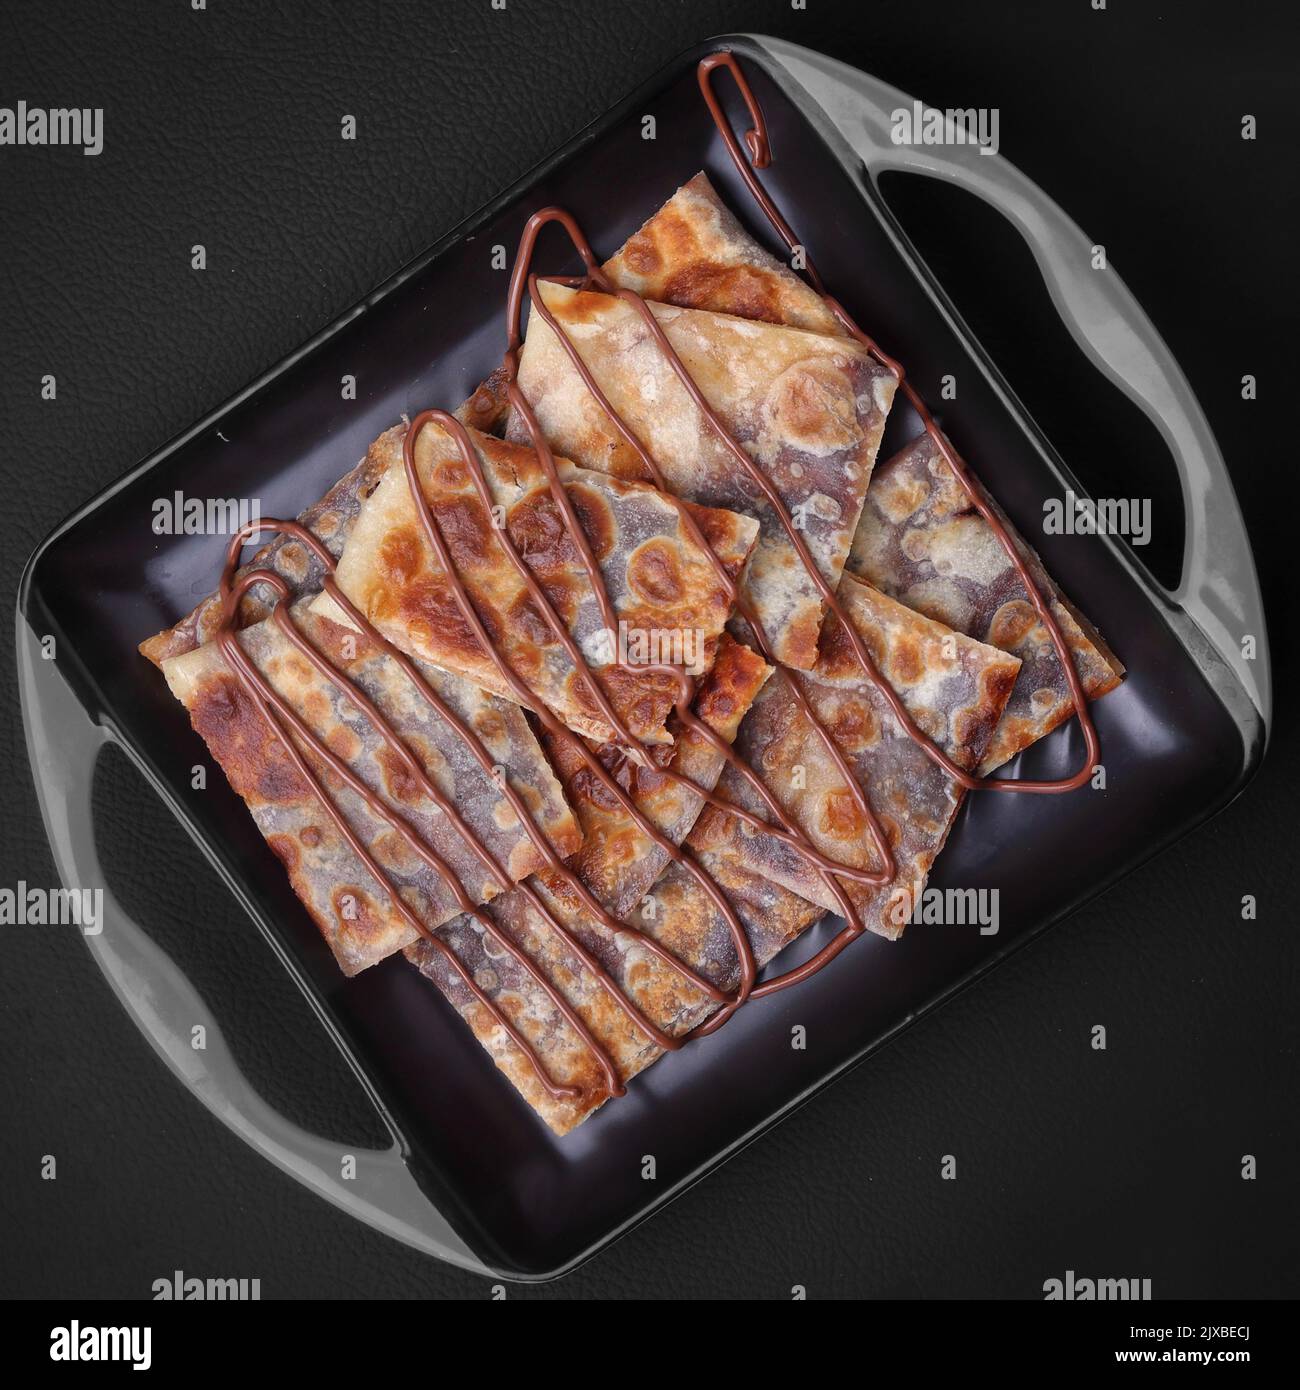 roasted tandoori roti with chocolate arrange in a dish dark background studio photography Stock Photo